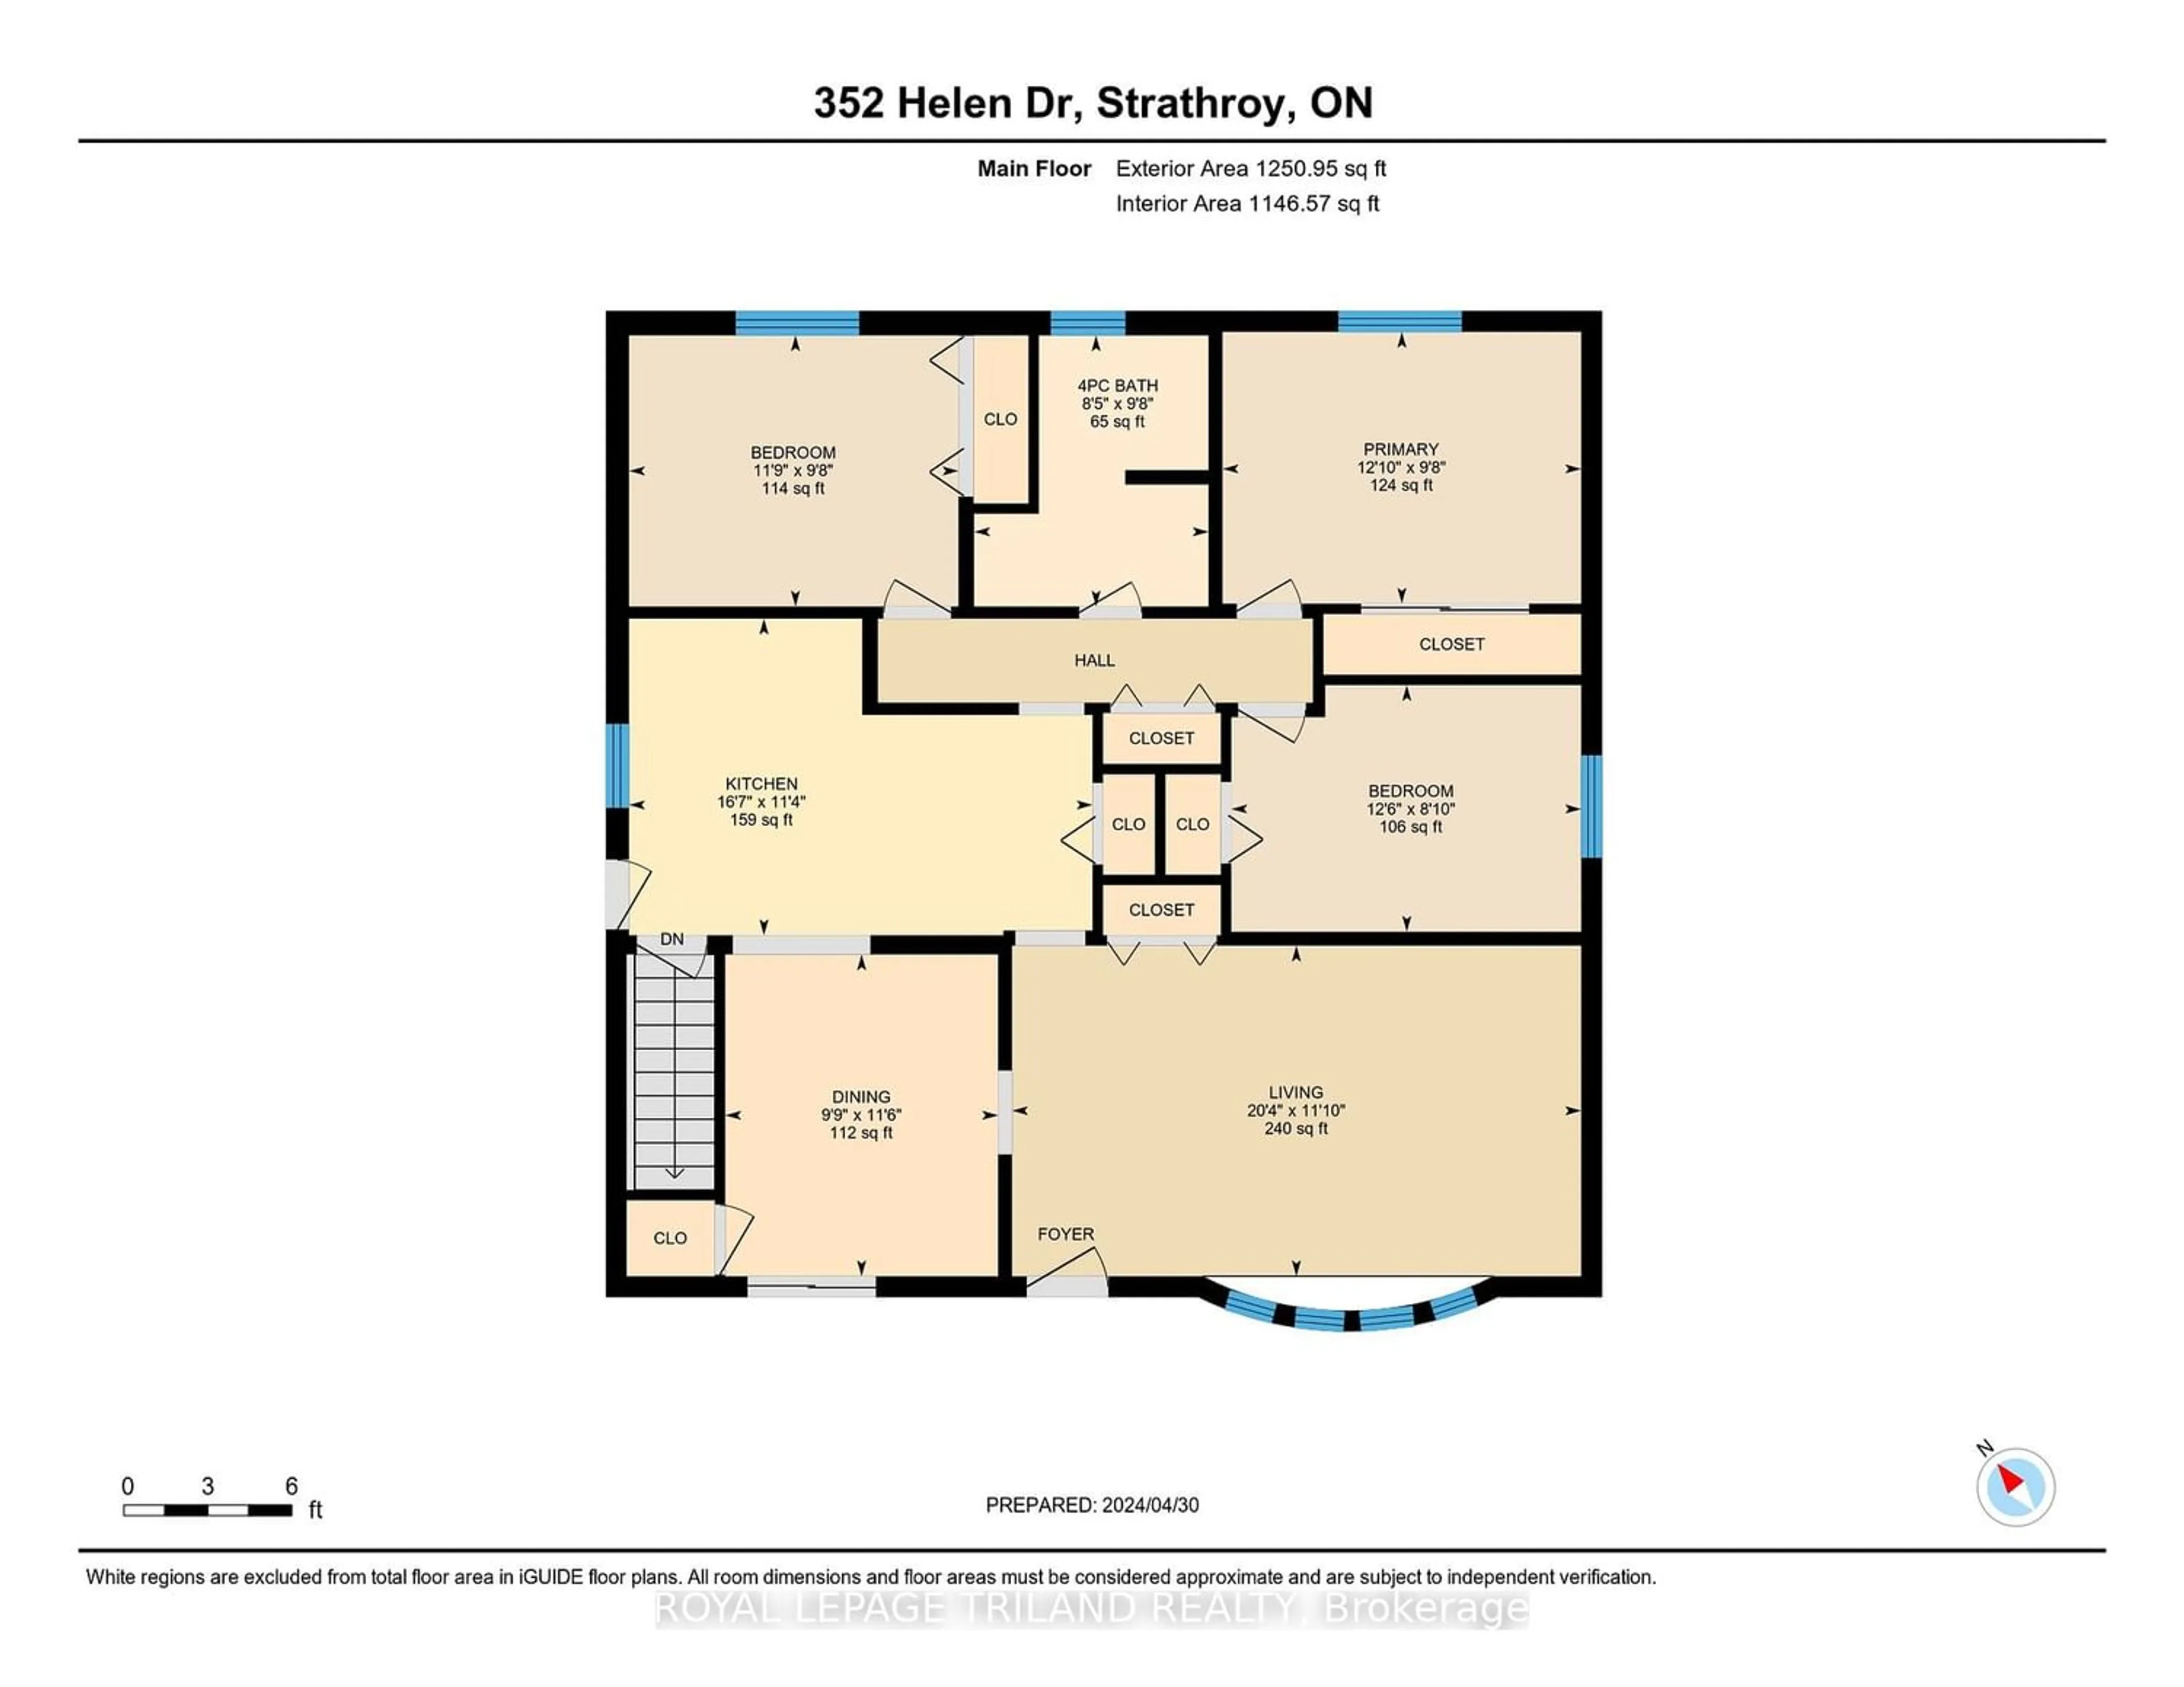 Floor plan for 352 Helen Dr, Strathroy-Caradoc Ontario N7G 3M4